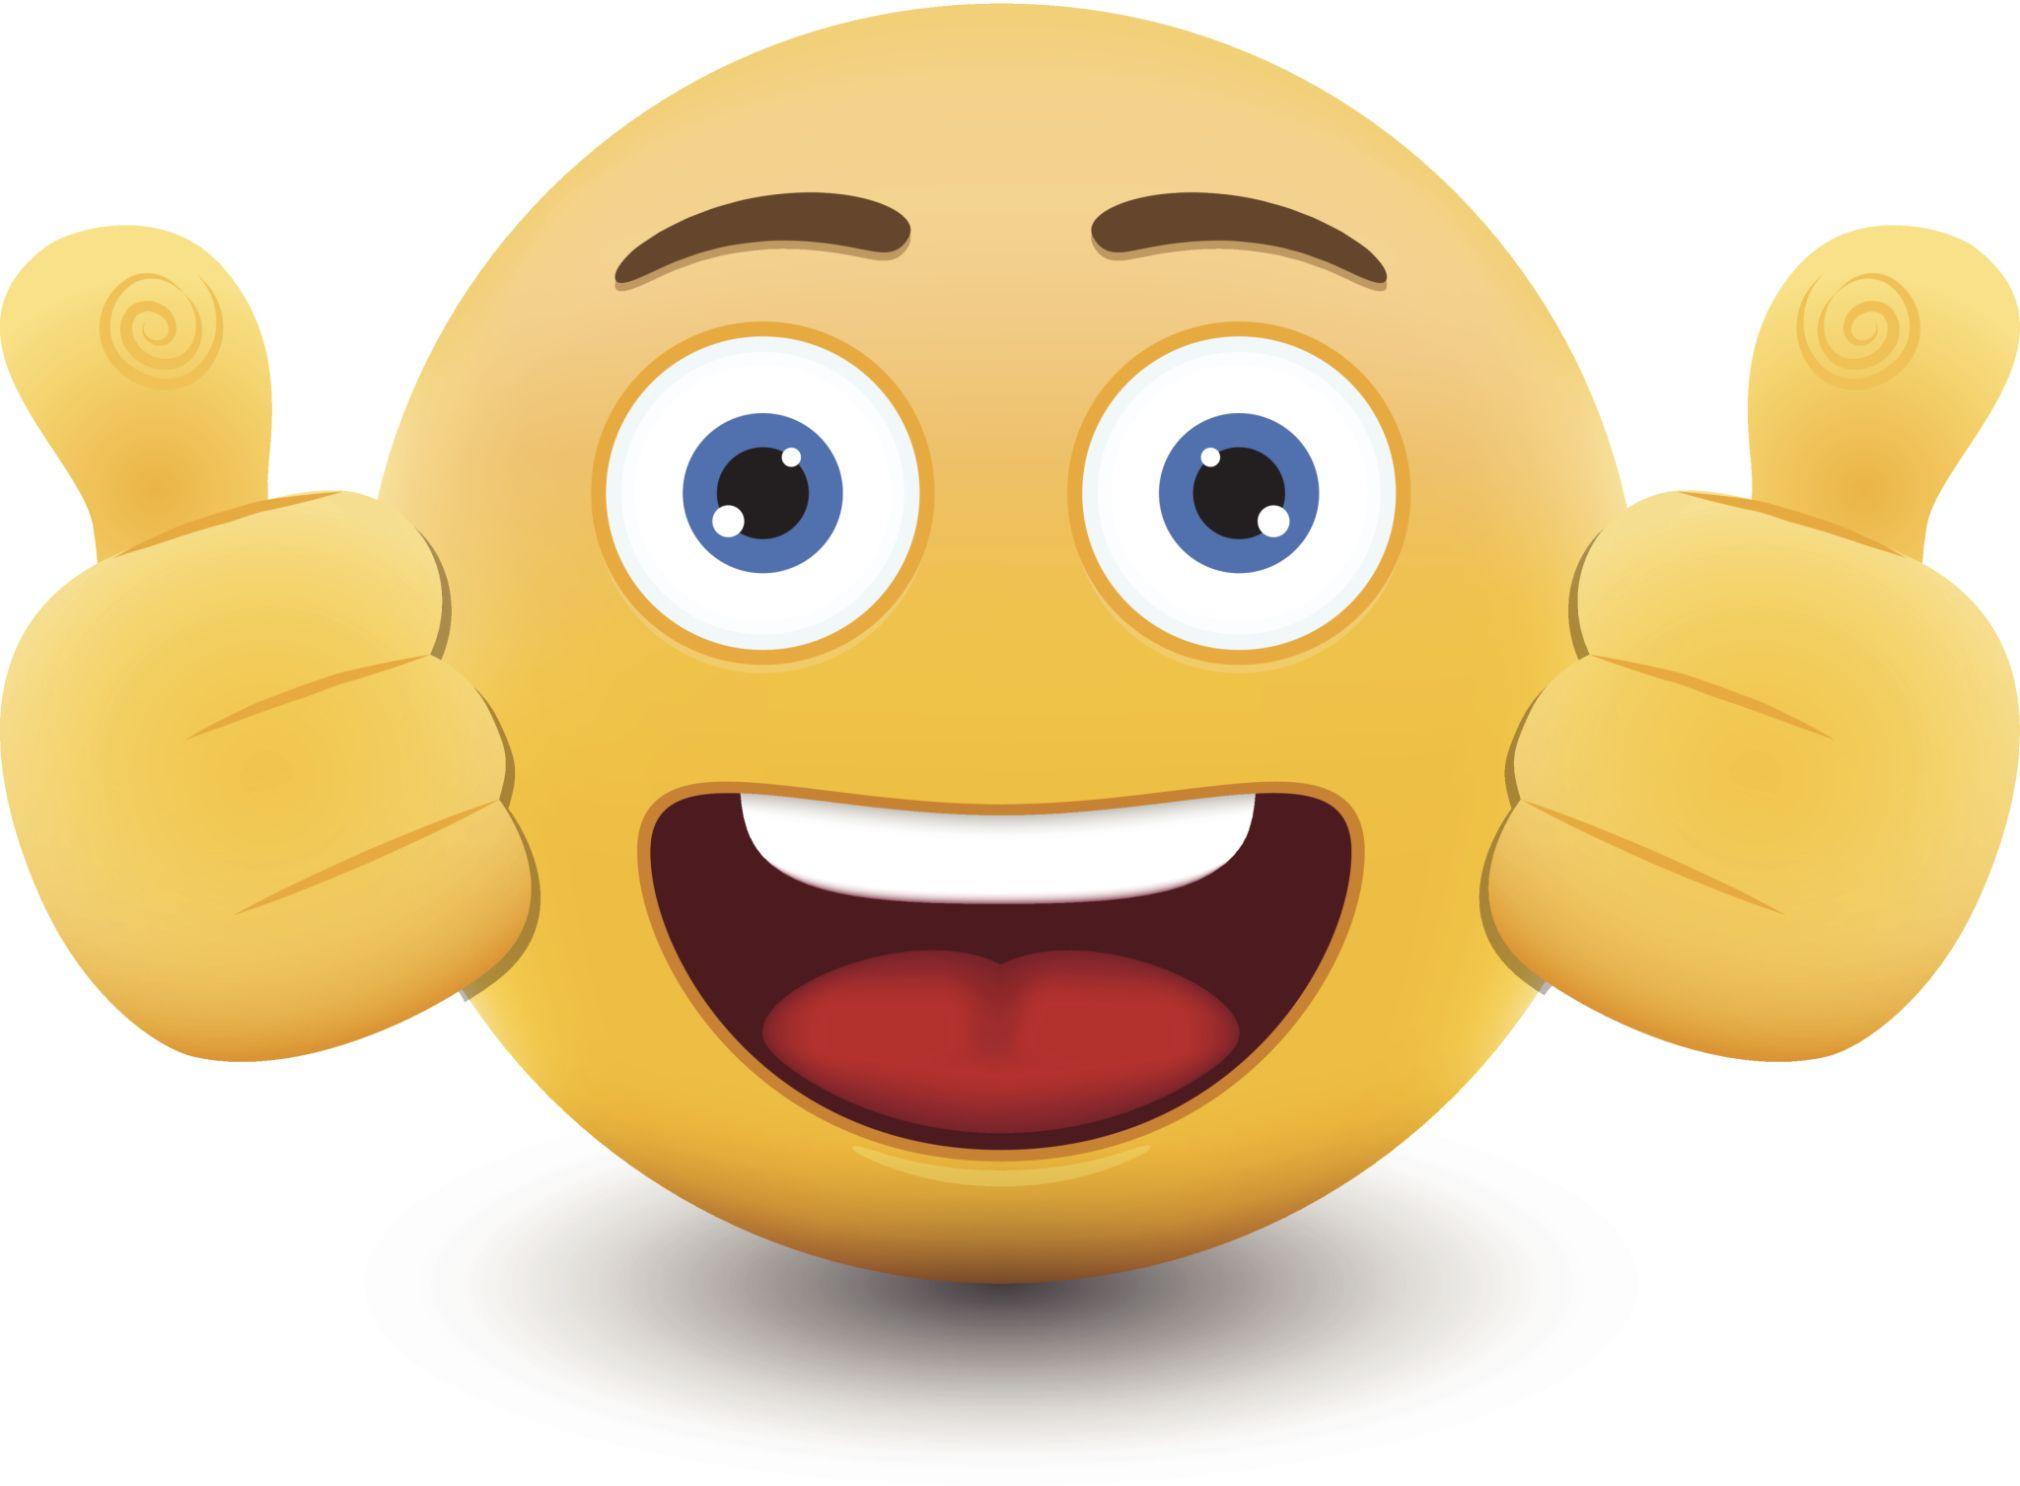 Surprised Face Emoji Wallpaper Widescreen, Other Wallpaper